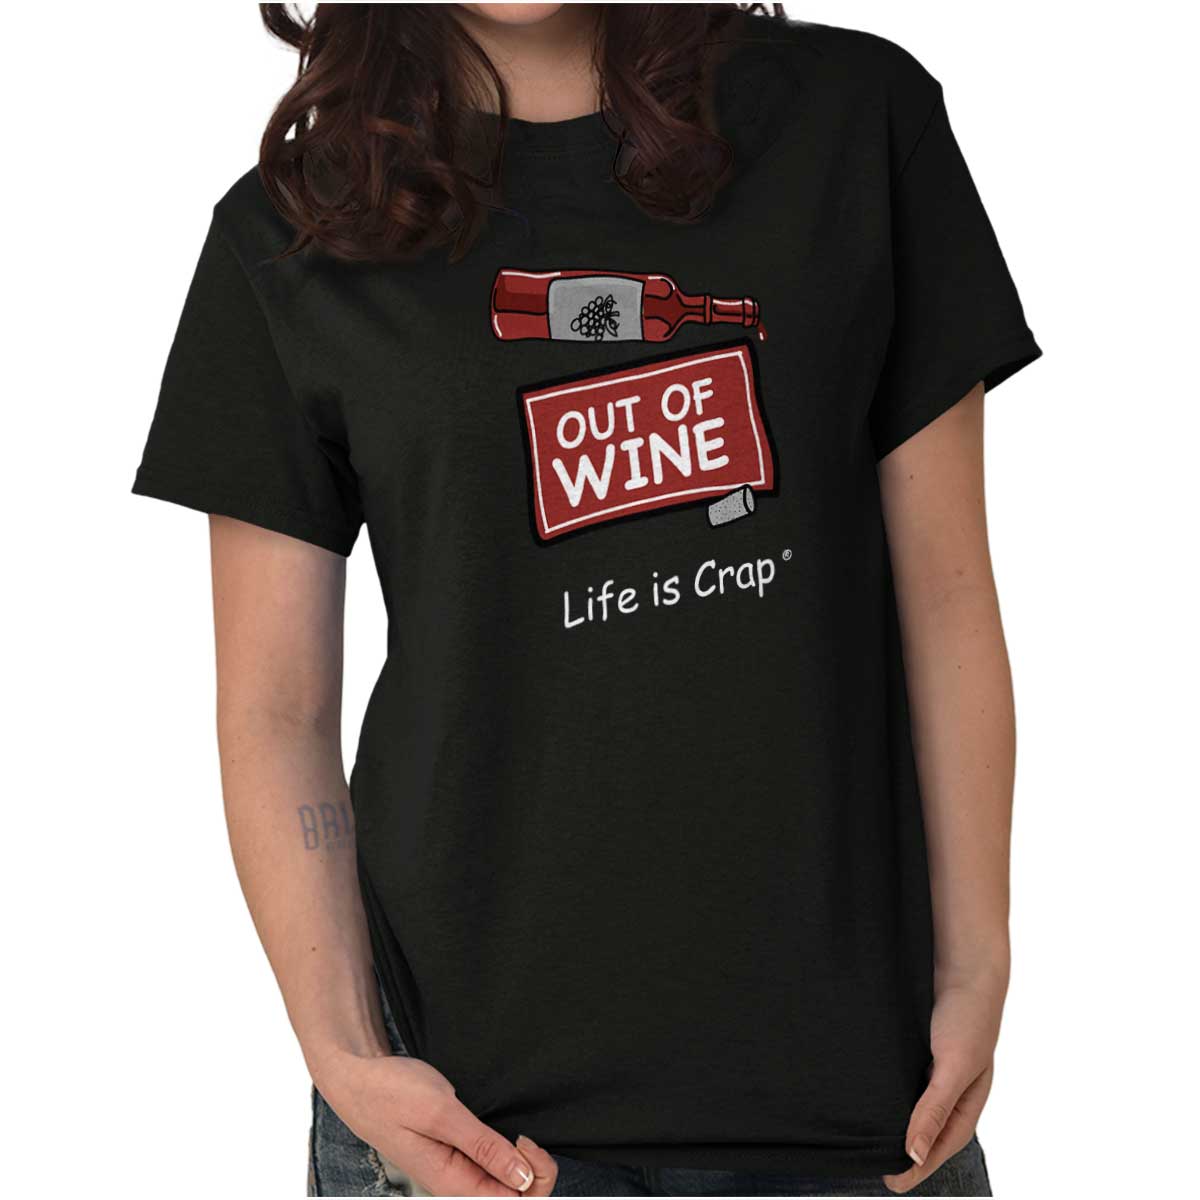 Life is Crap Jet Ski Funny Shirt Cool Gift Idea Sarcastic Classic T Shirt Tee